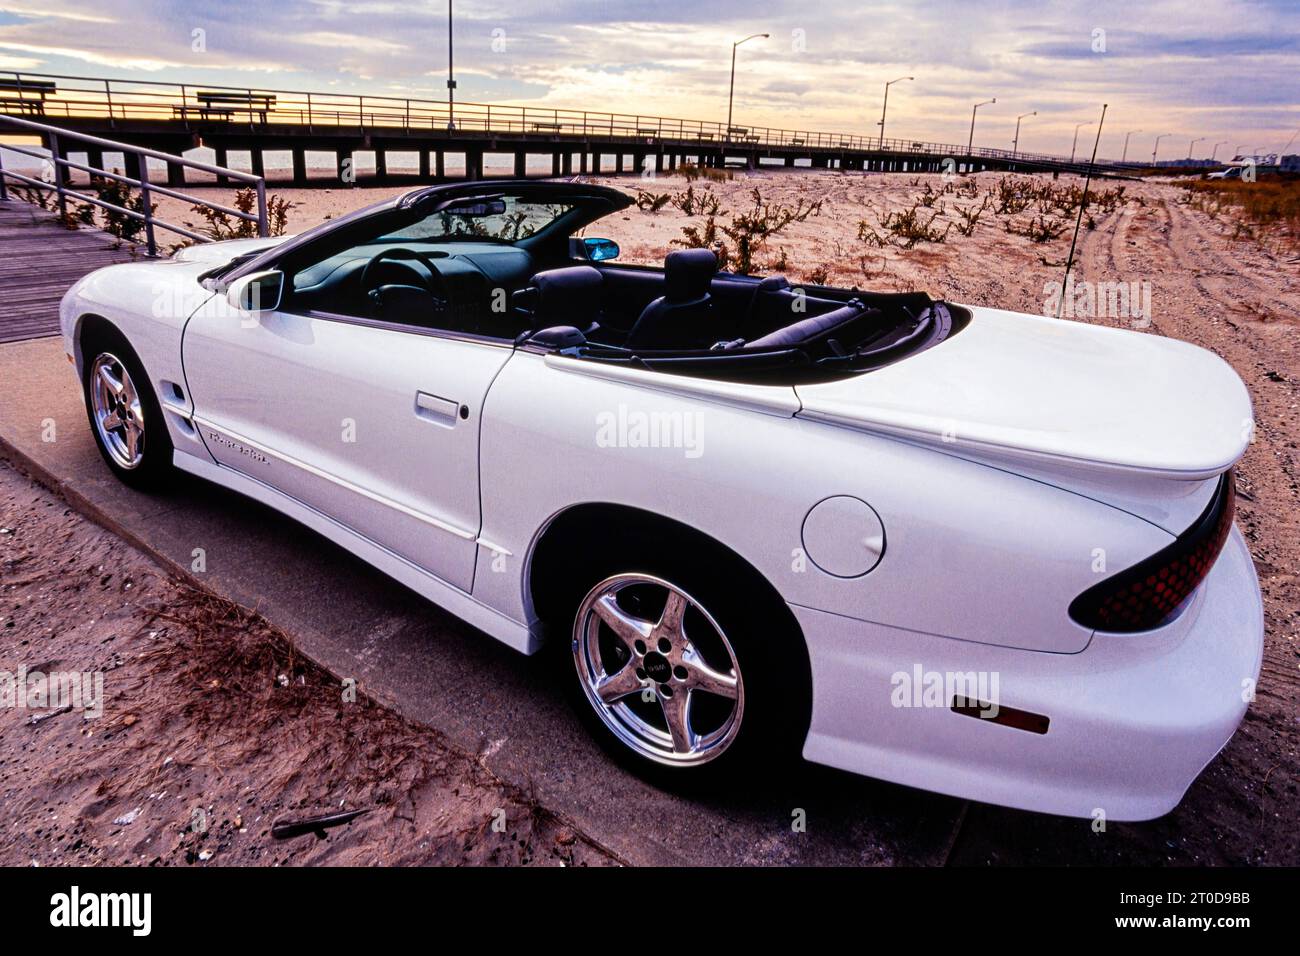 White Pontiac Firebird Trans Am 1999 convertible, series 4 model, parked on wasteland, New York, USA Stock Photo